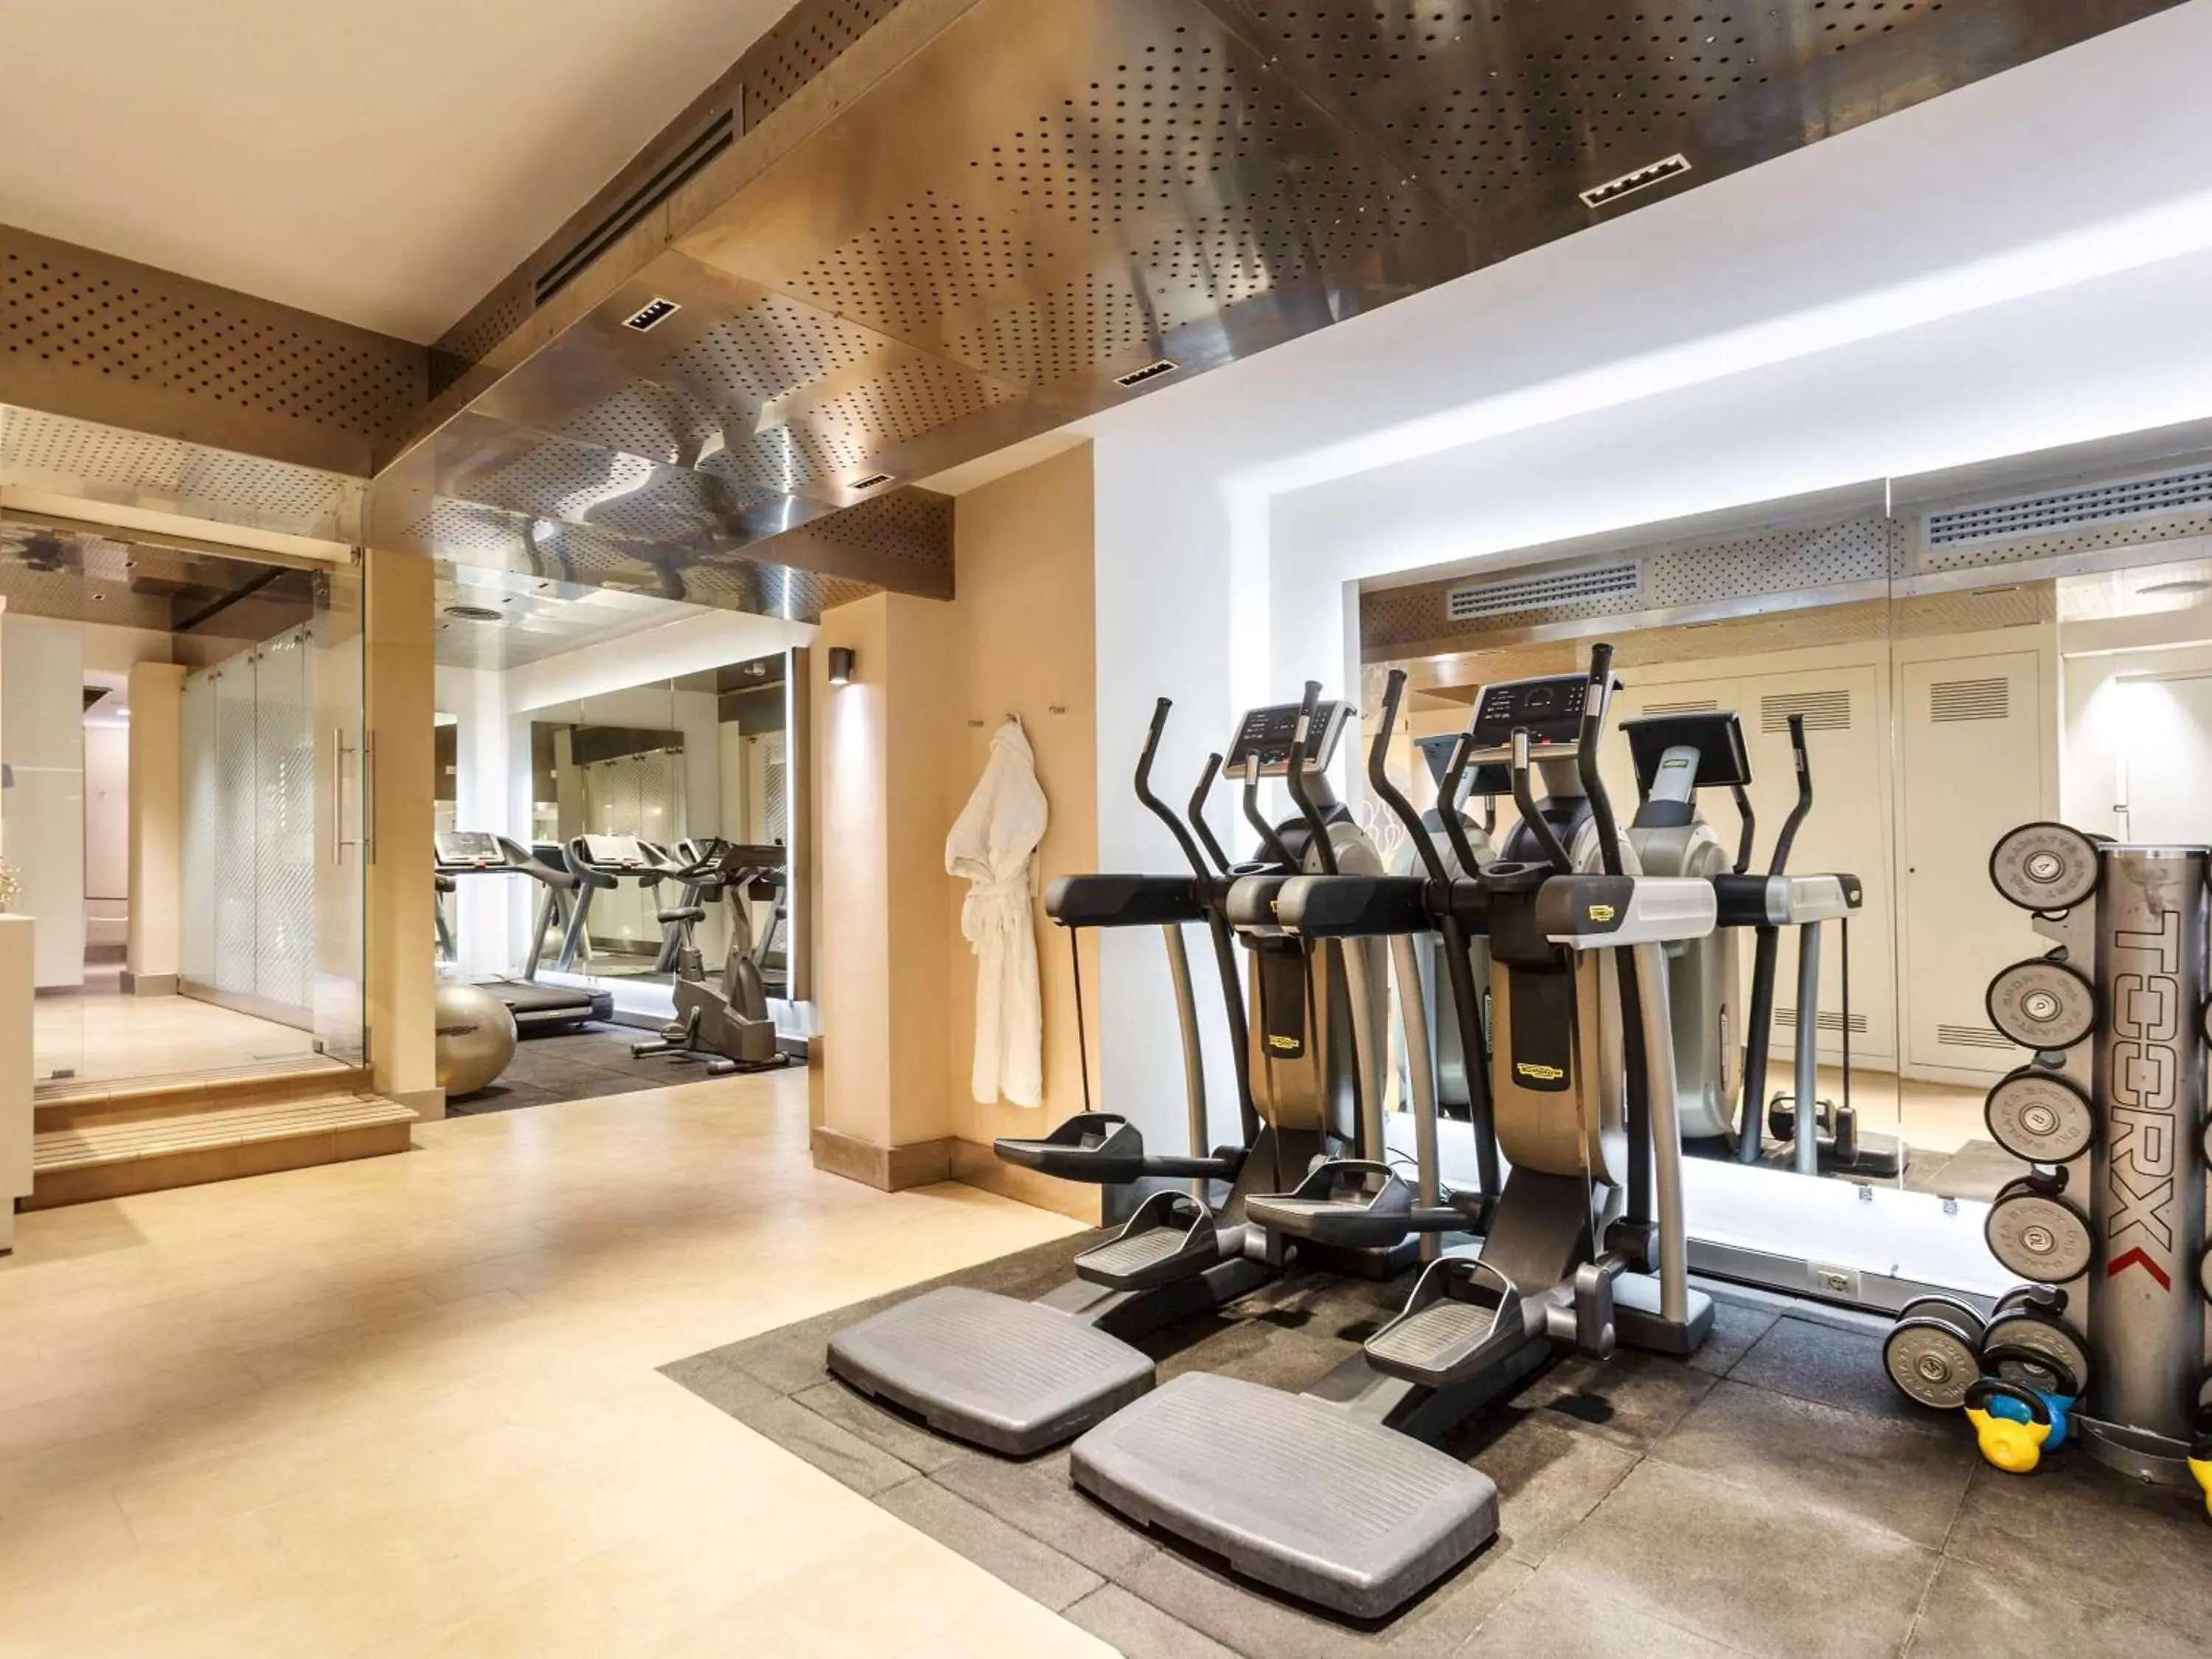 Fitness centre/facilities, Fitness Center/Facilities in MGallery Palazzo Caracciolo Napoli - Hotel Collection